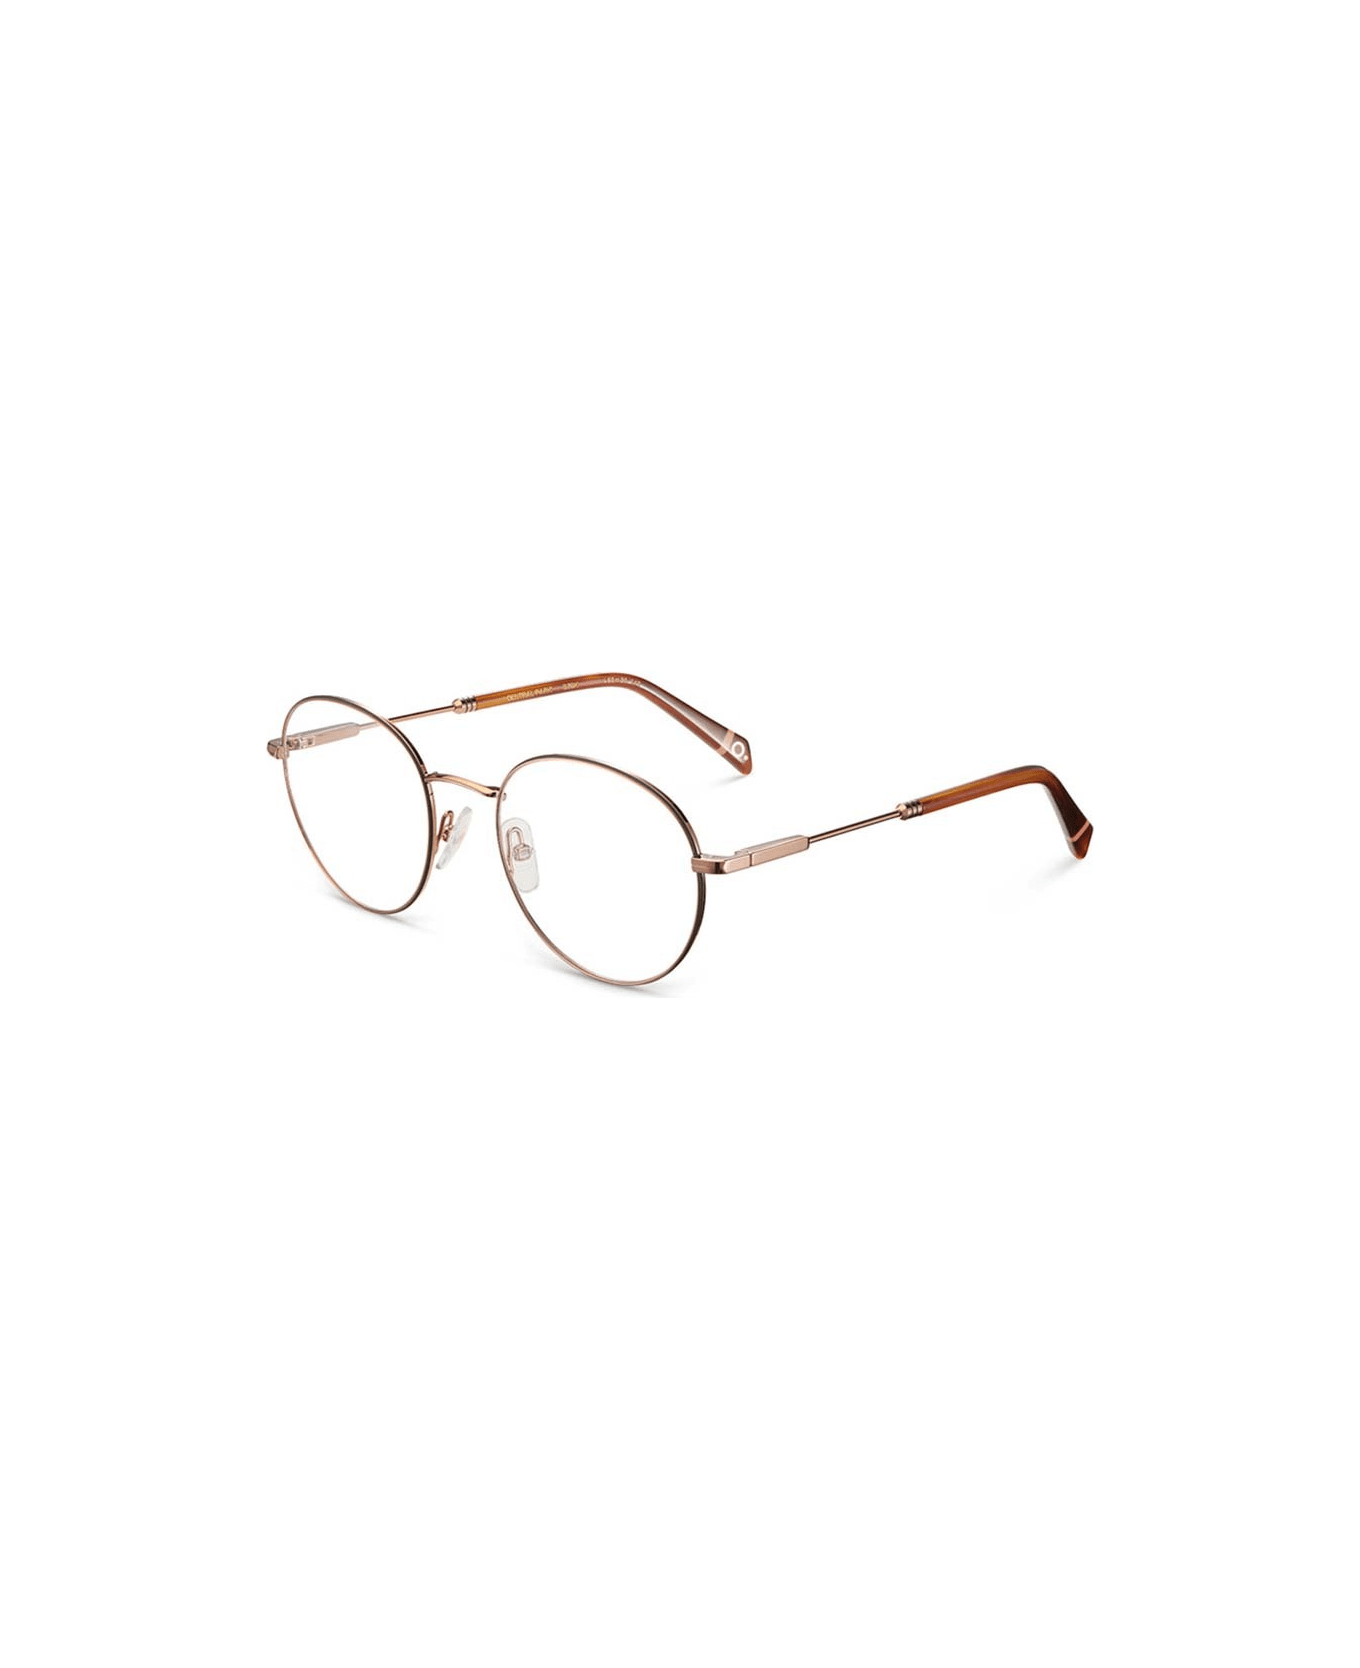 Etnia Barcelona Glasses - Bronzo アイウェア